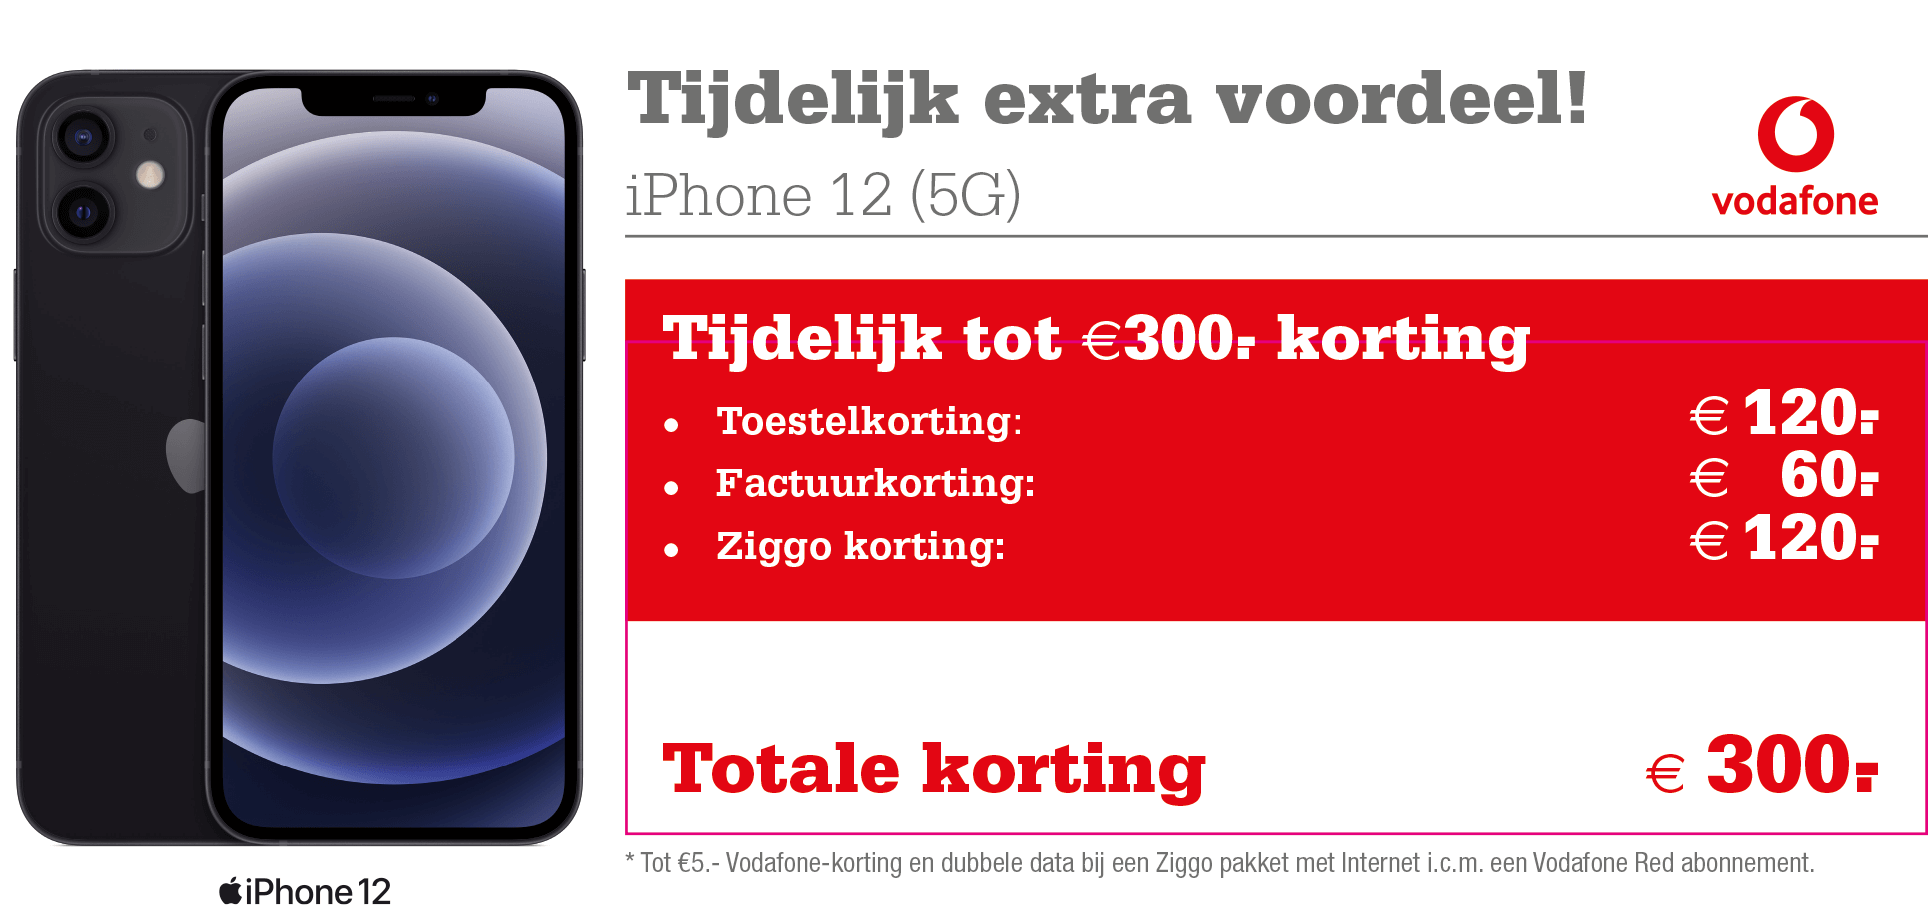 Vodafone Unlimited aanbieding: tot €300,- korting op de 12! |